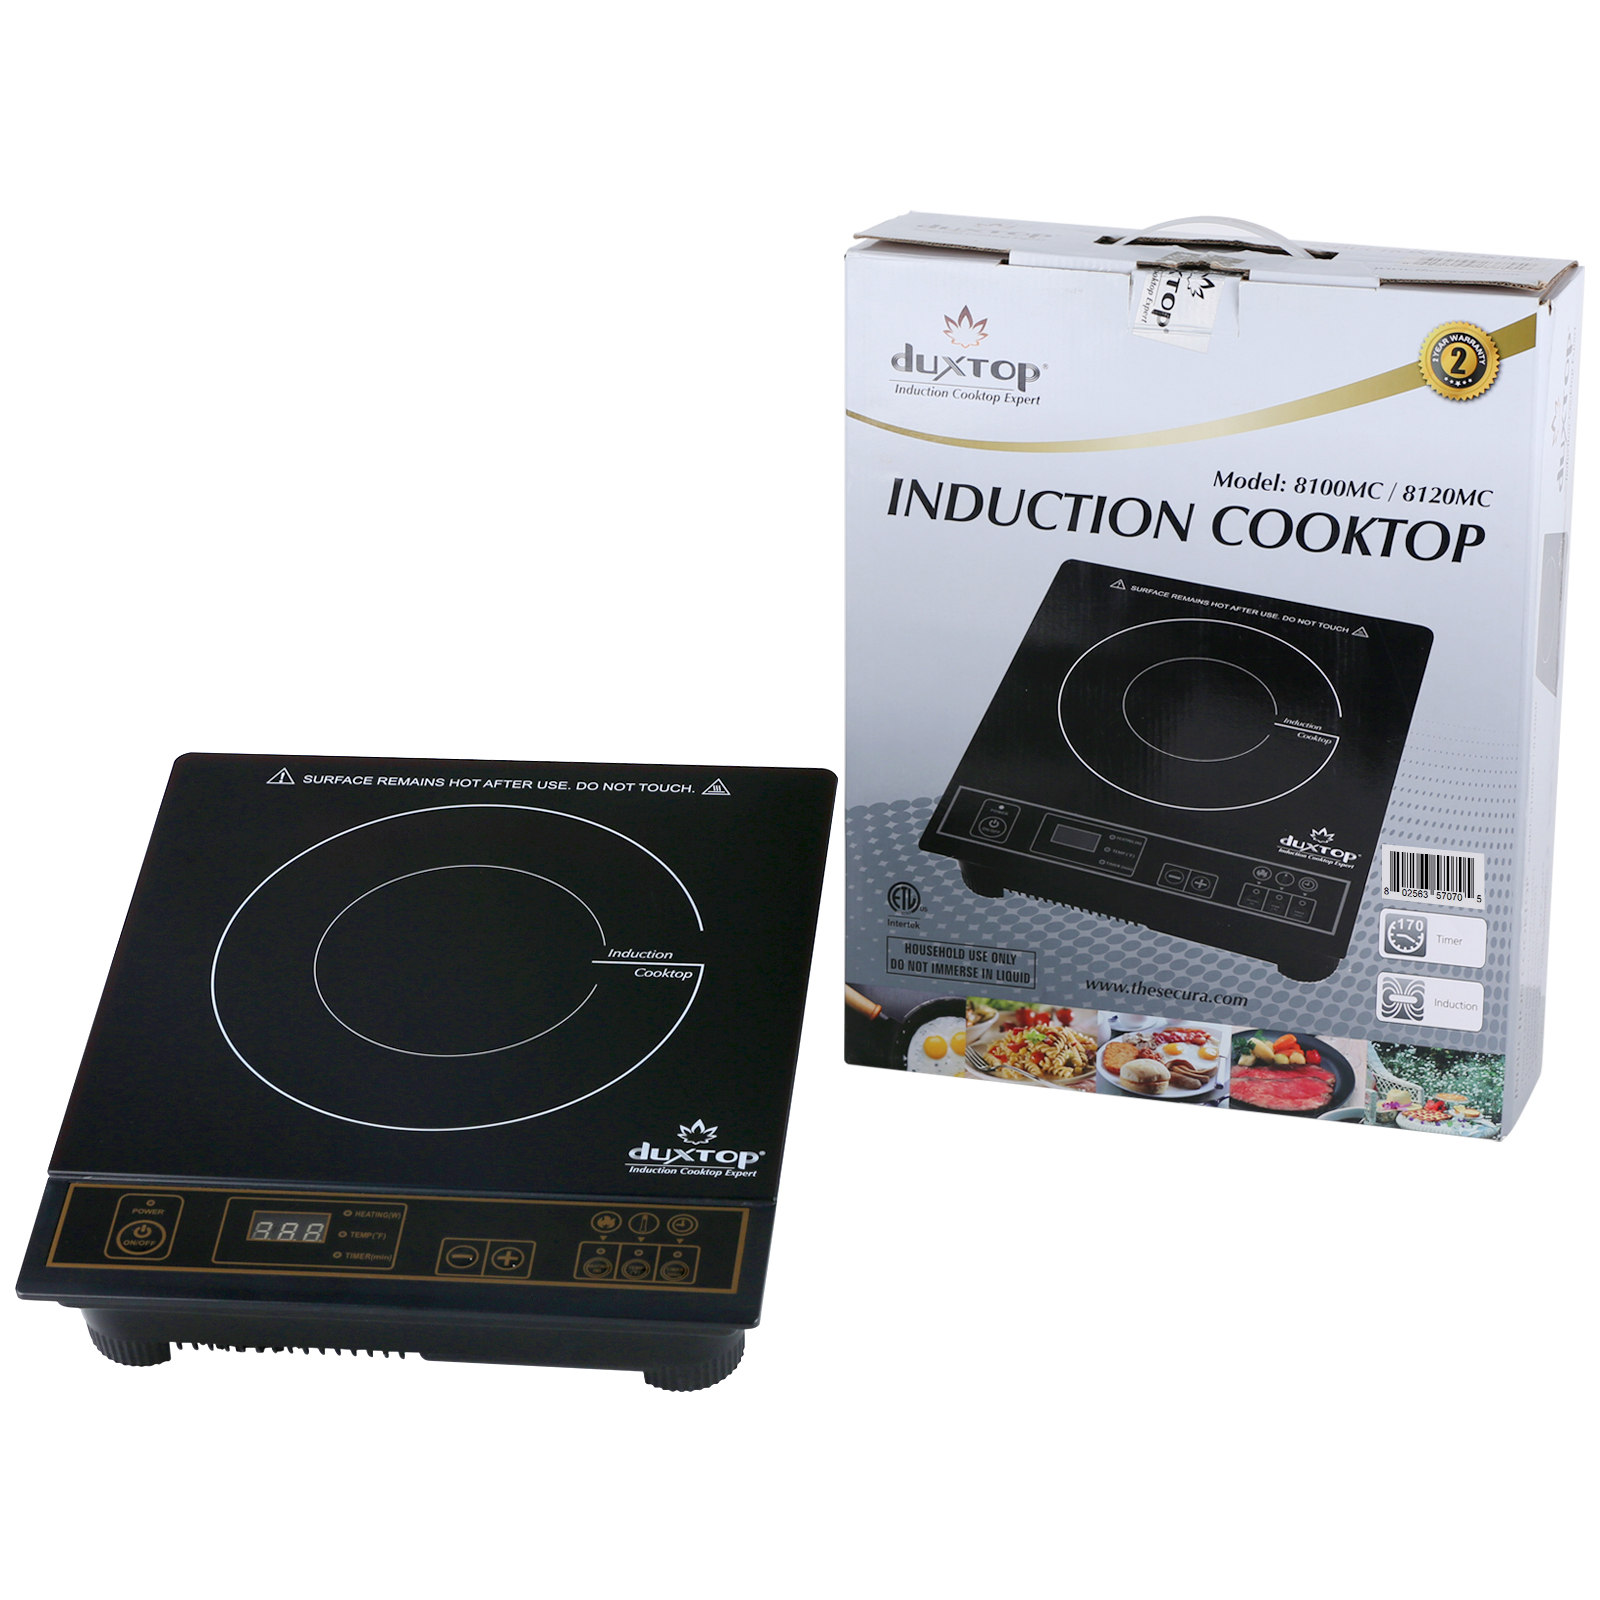 COMFEE' 1800W Digital Electric Portable Induction Cooktop Countertop Burner  1800W 便携式电磁炉8档功率、温度设置59.99 超值好货